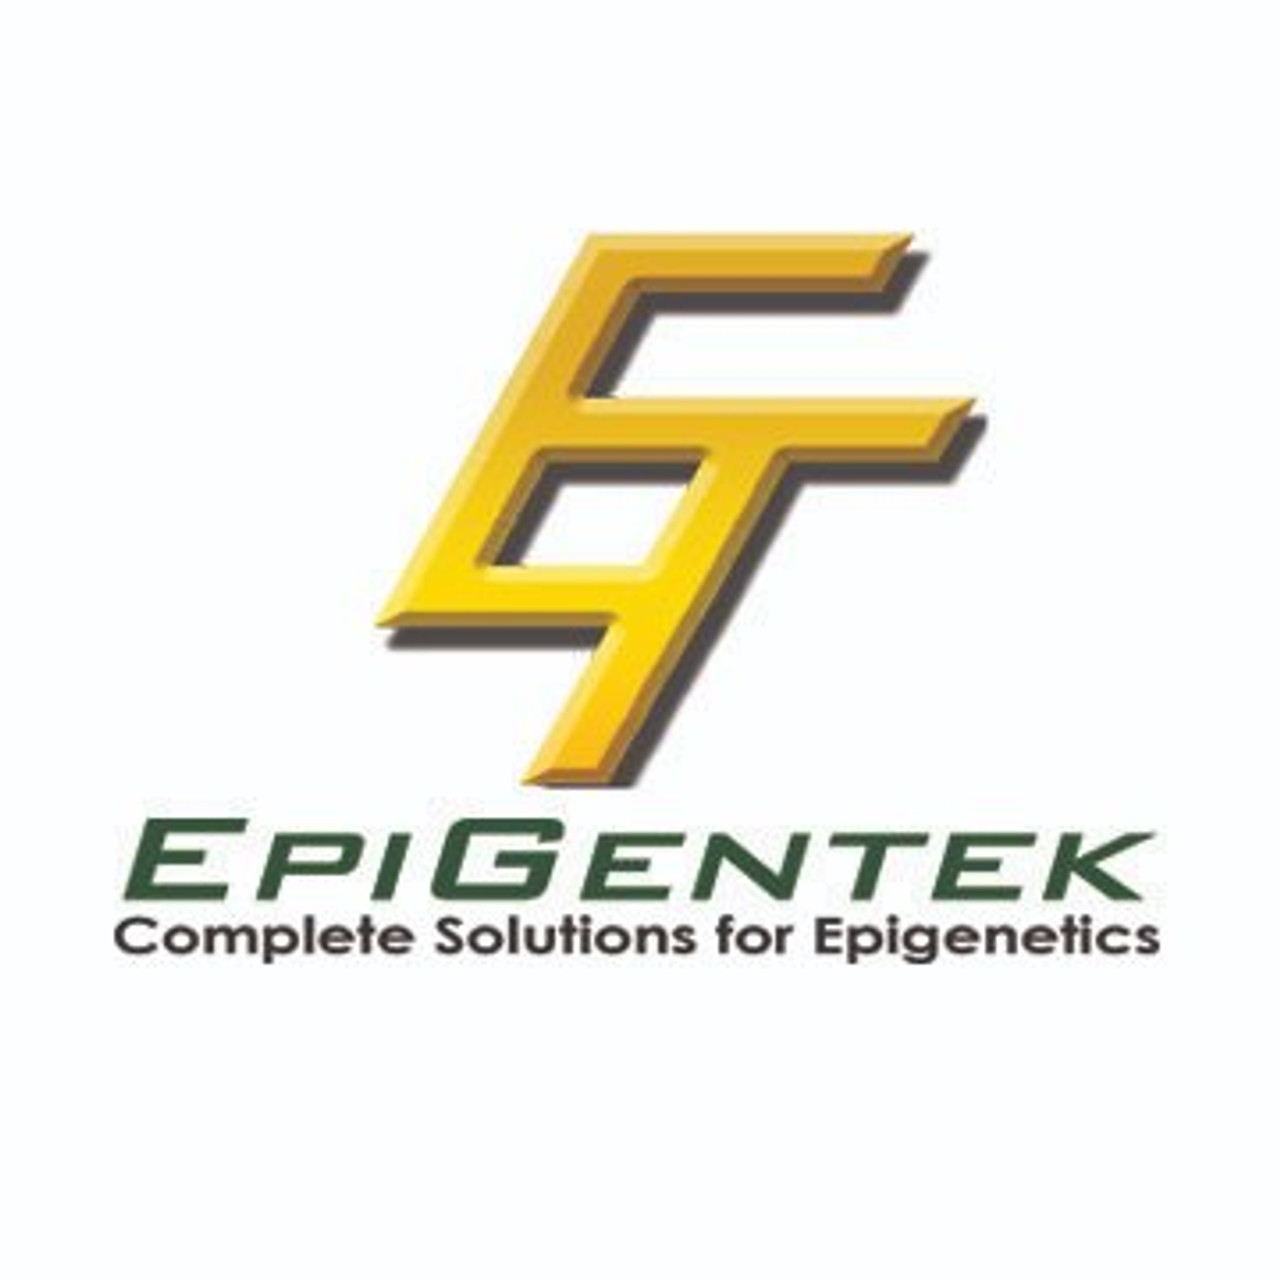 QuantiSir Specific Gene Knockdown Quantification Kit For Epigenetic Regulators - TFIIB